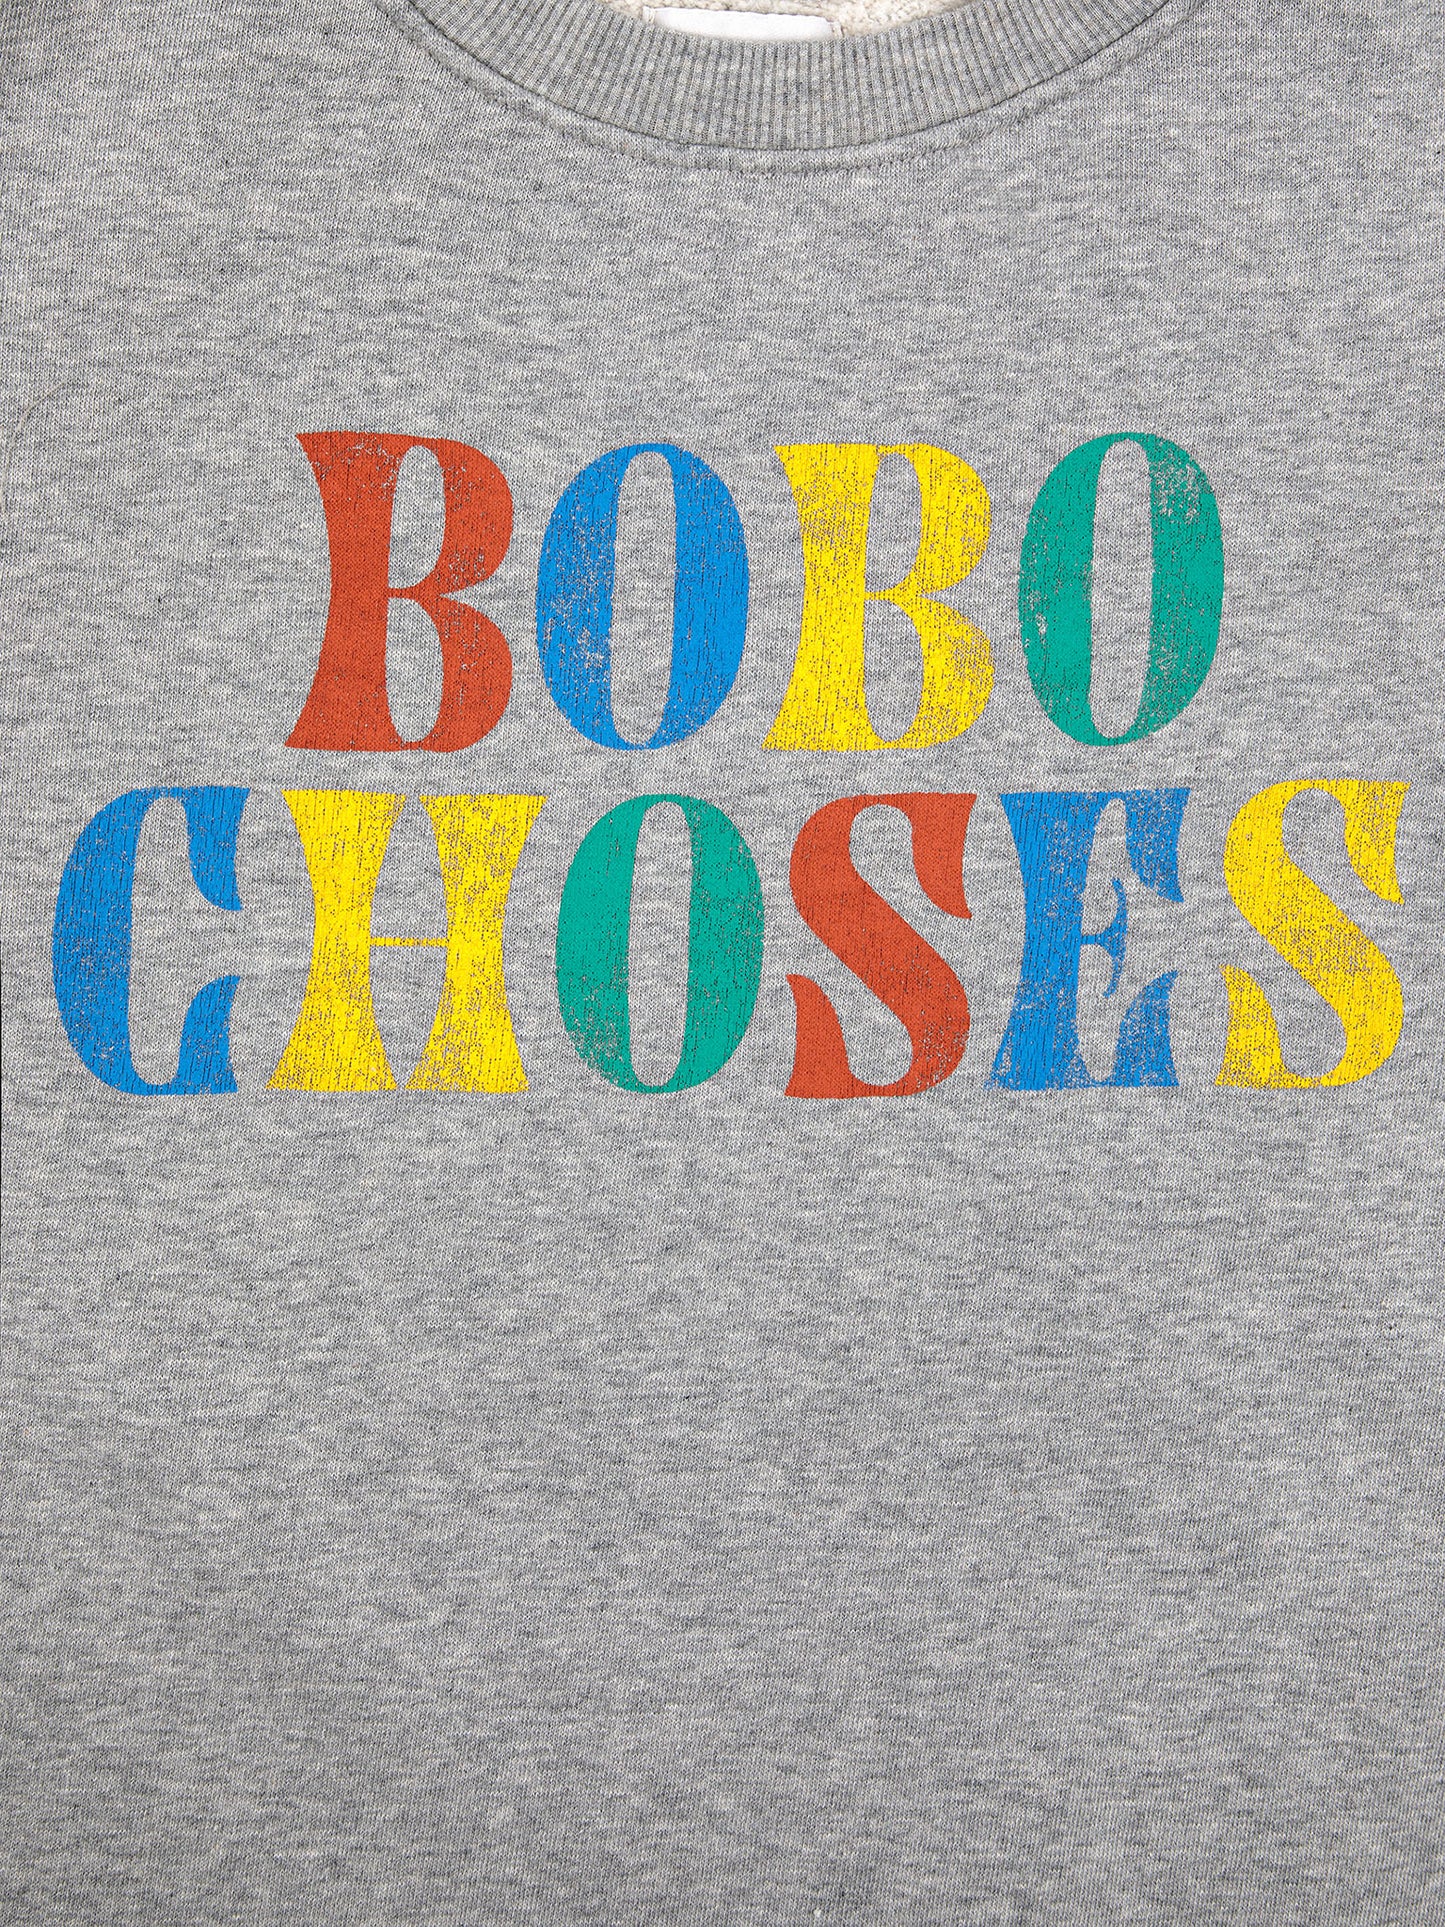 Bobo Choses Multicolor dress